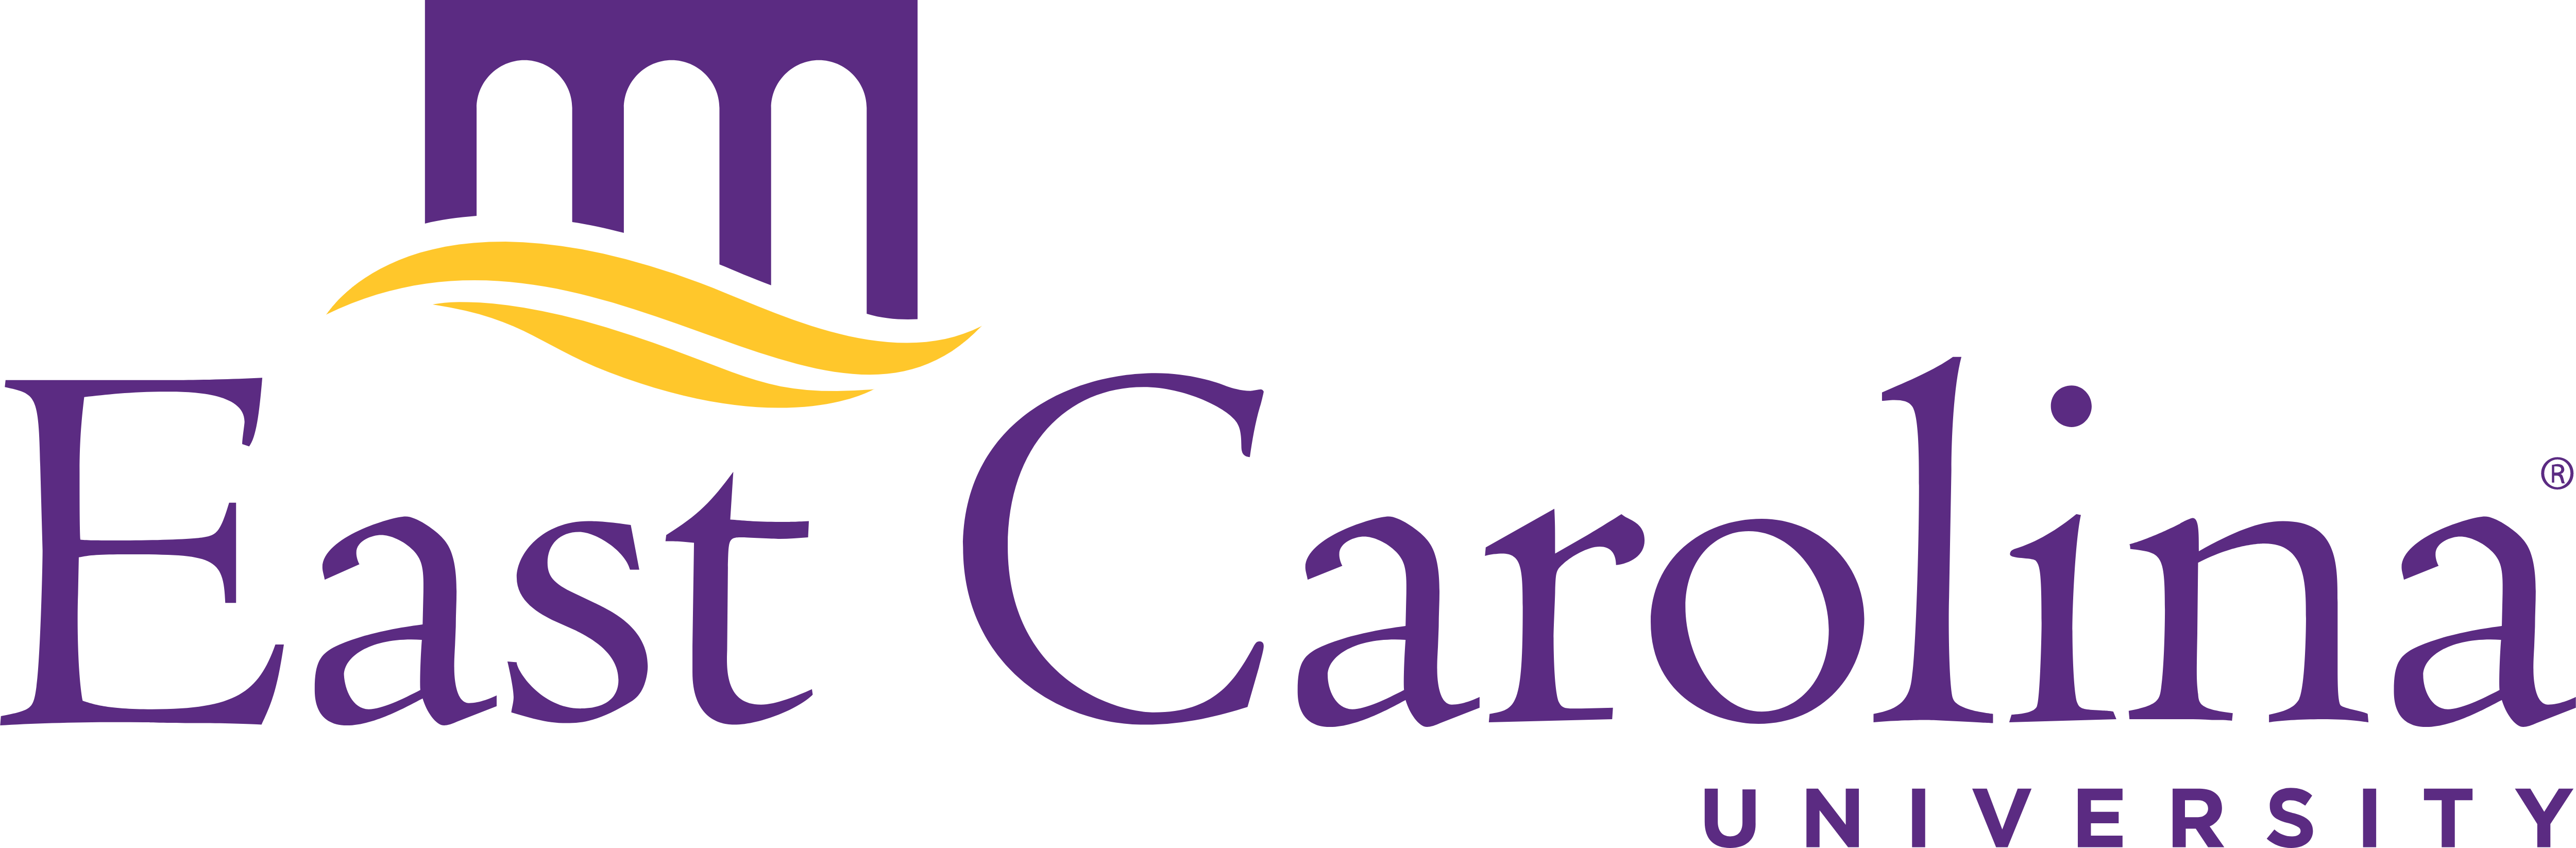 East Carolina University Logos Download